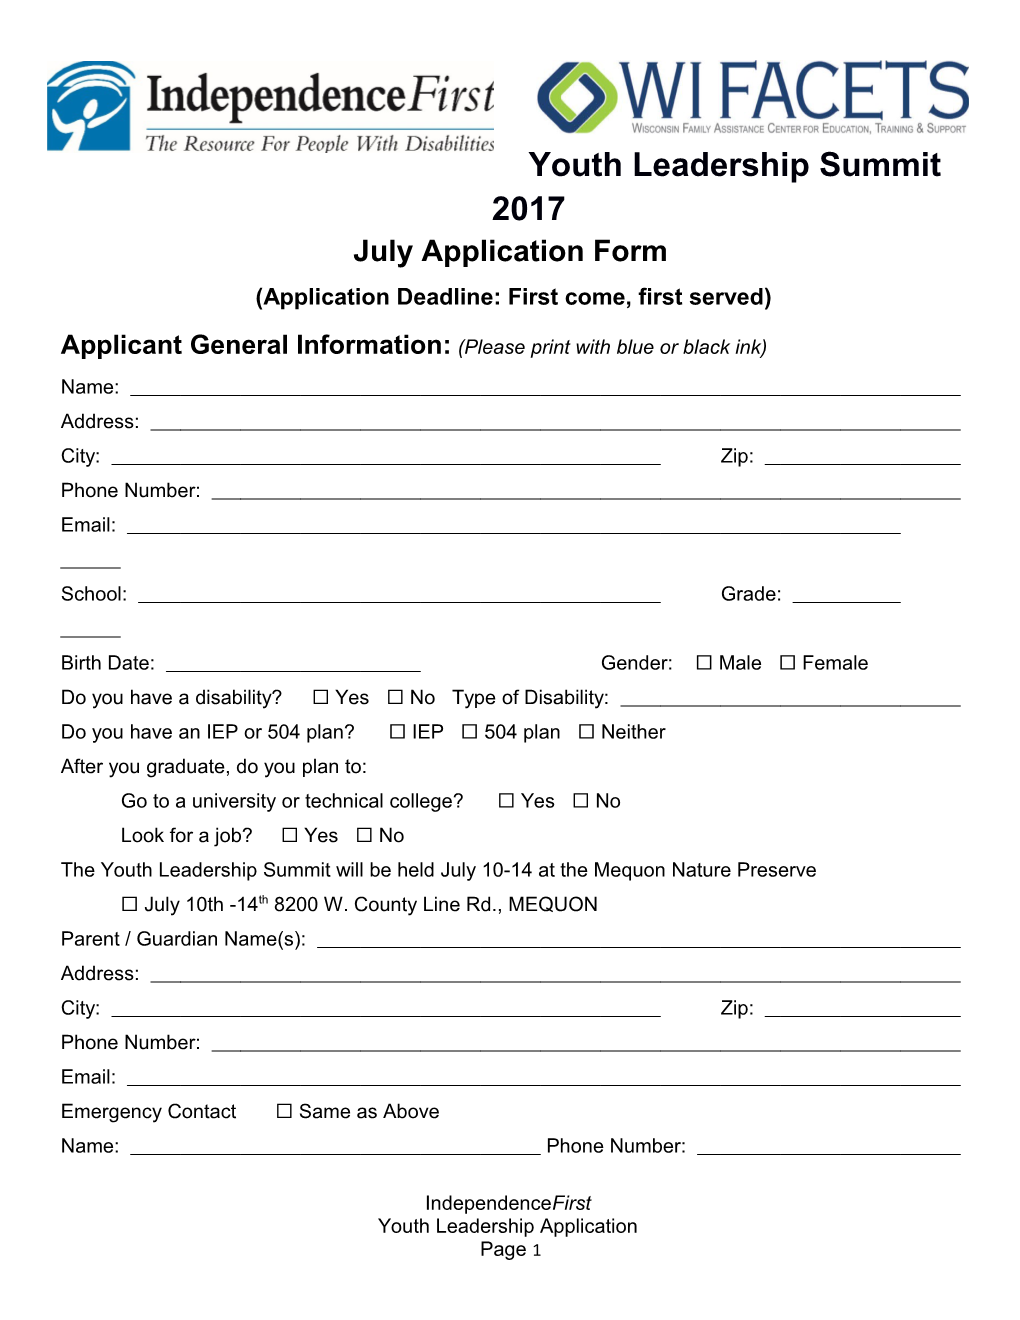 Youth Leadership Summit 2017